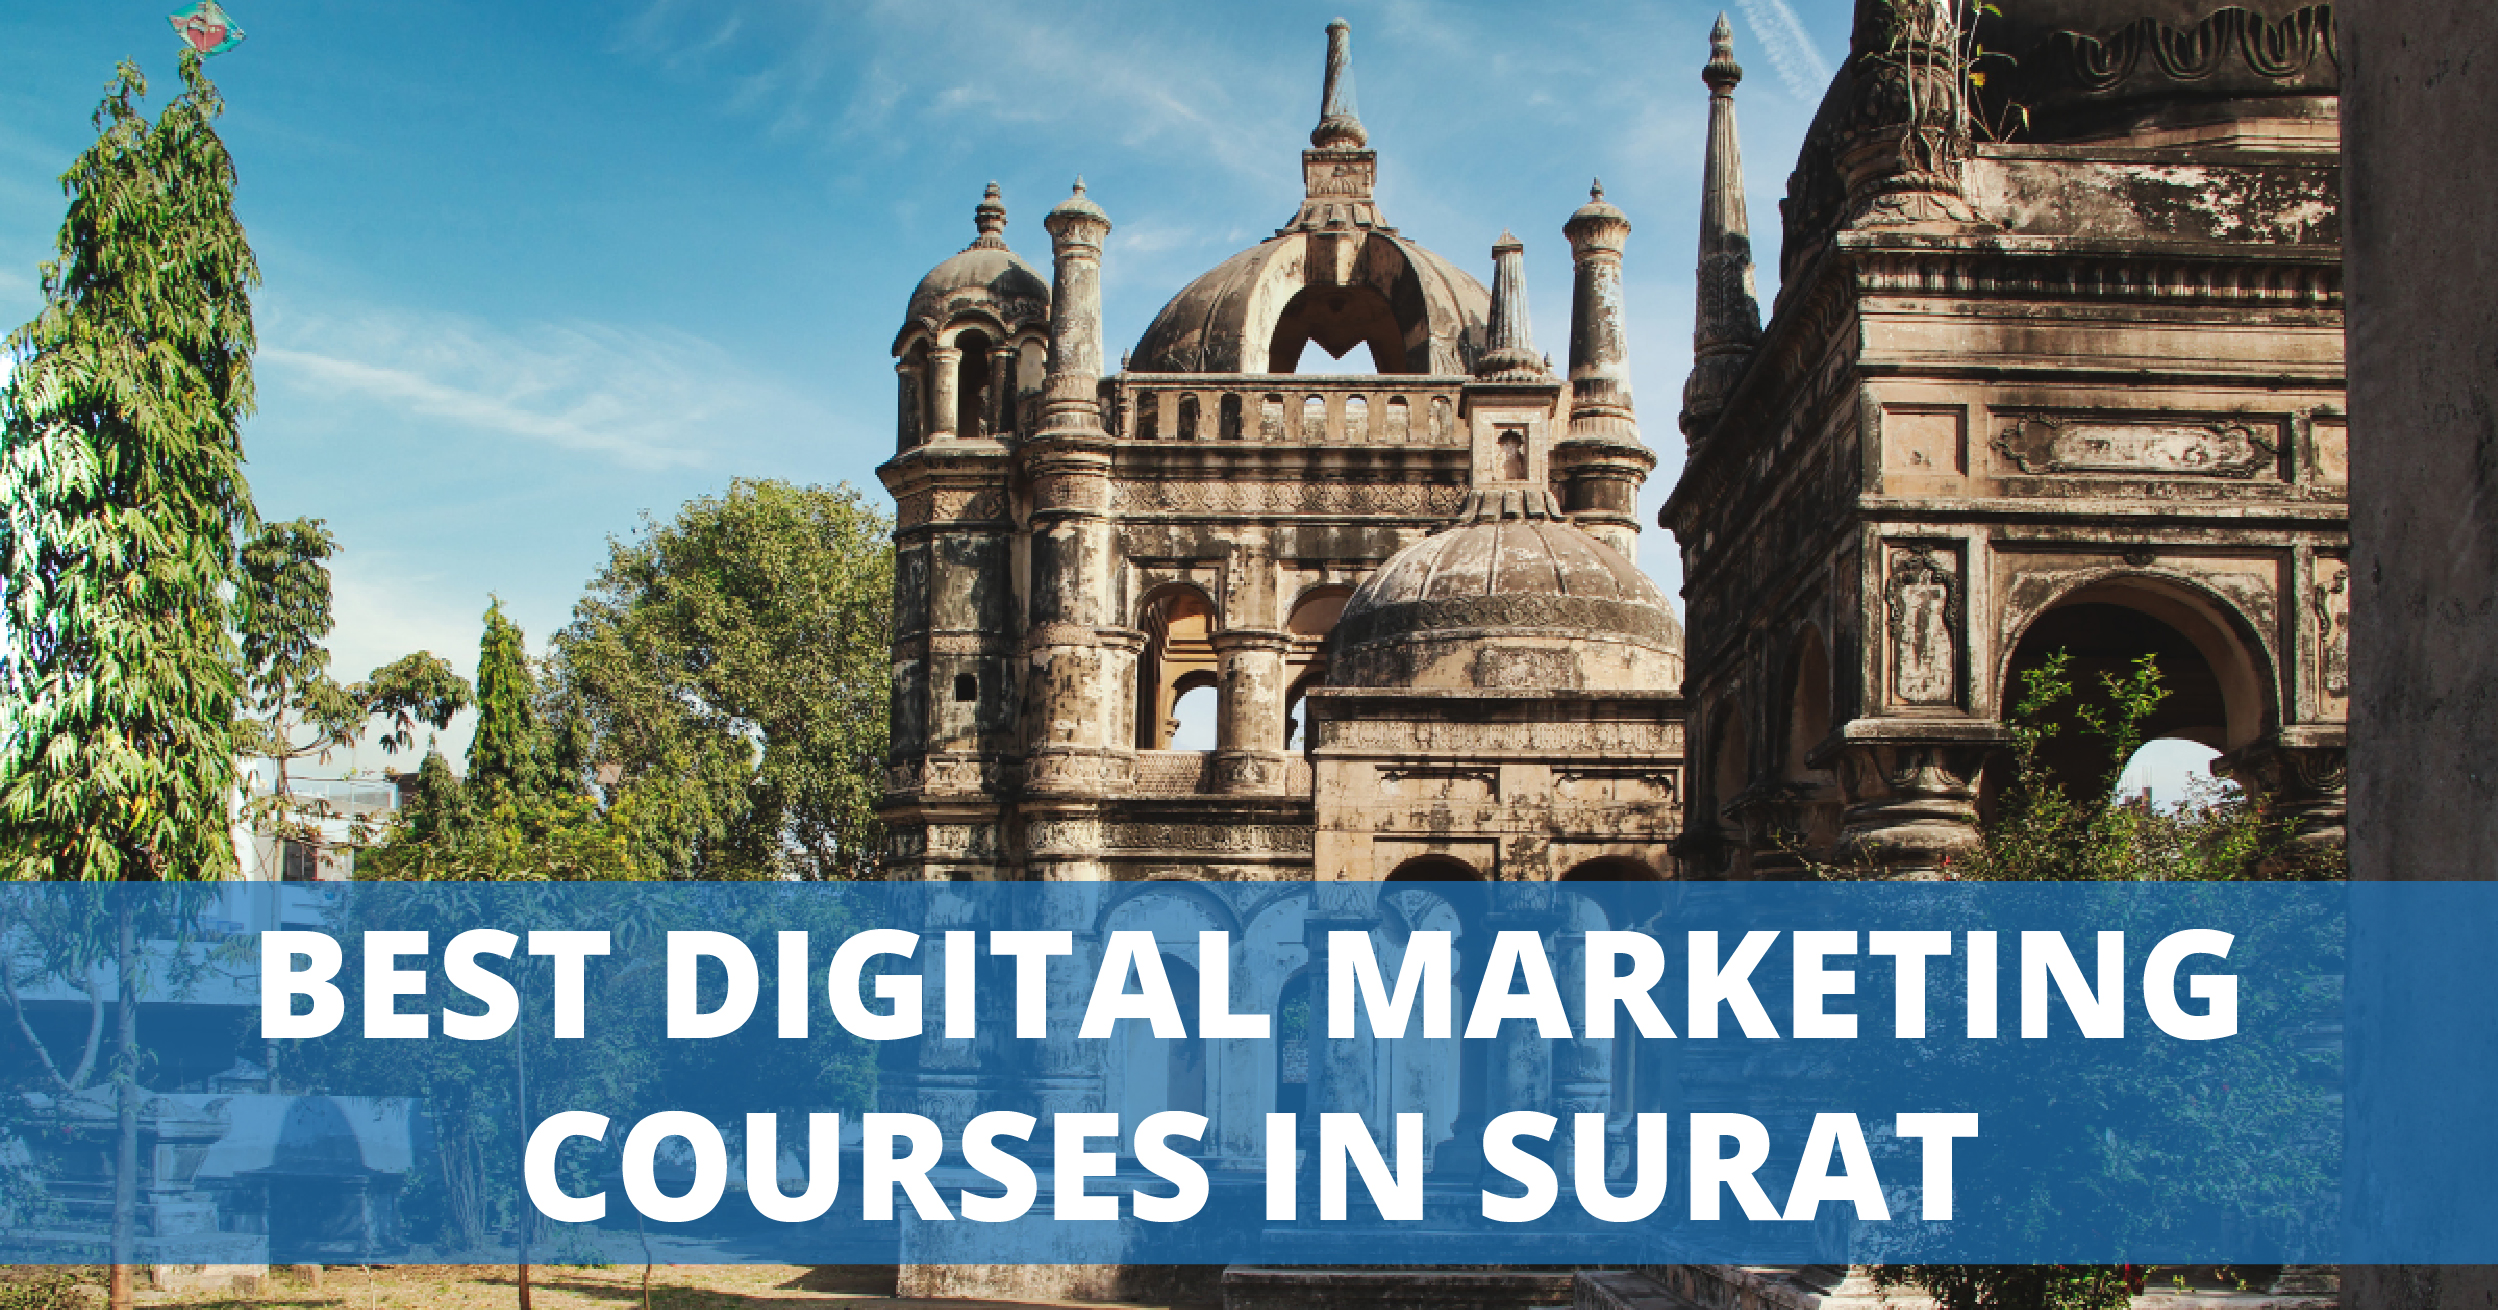 Digital marketing courses in surat